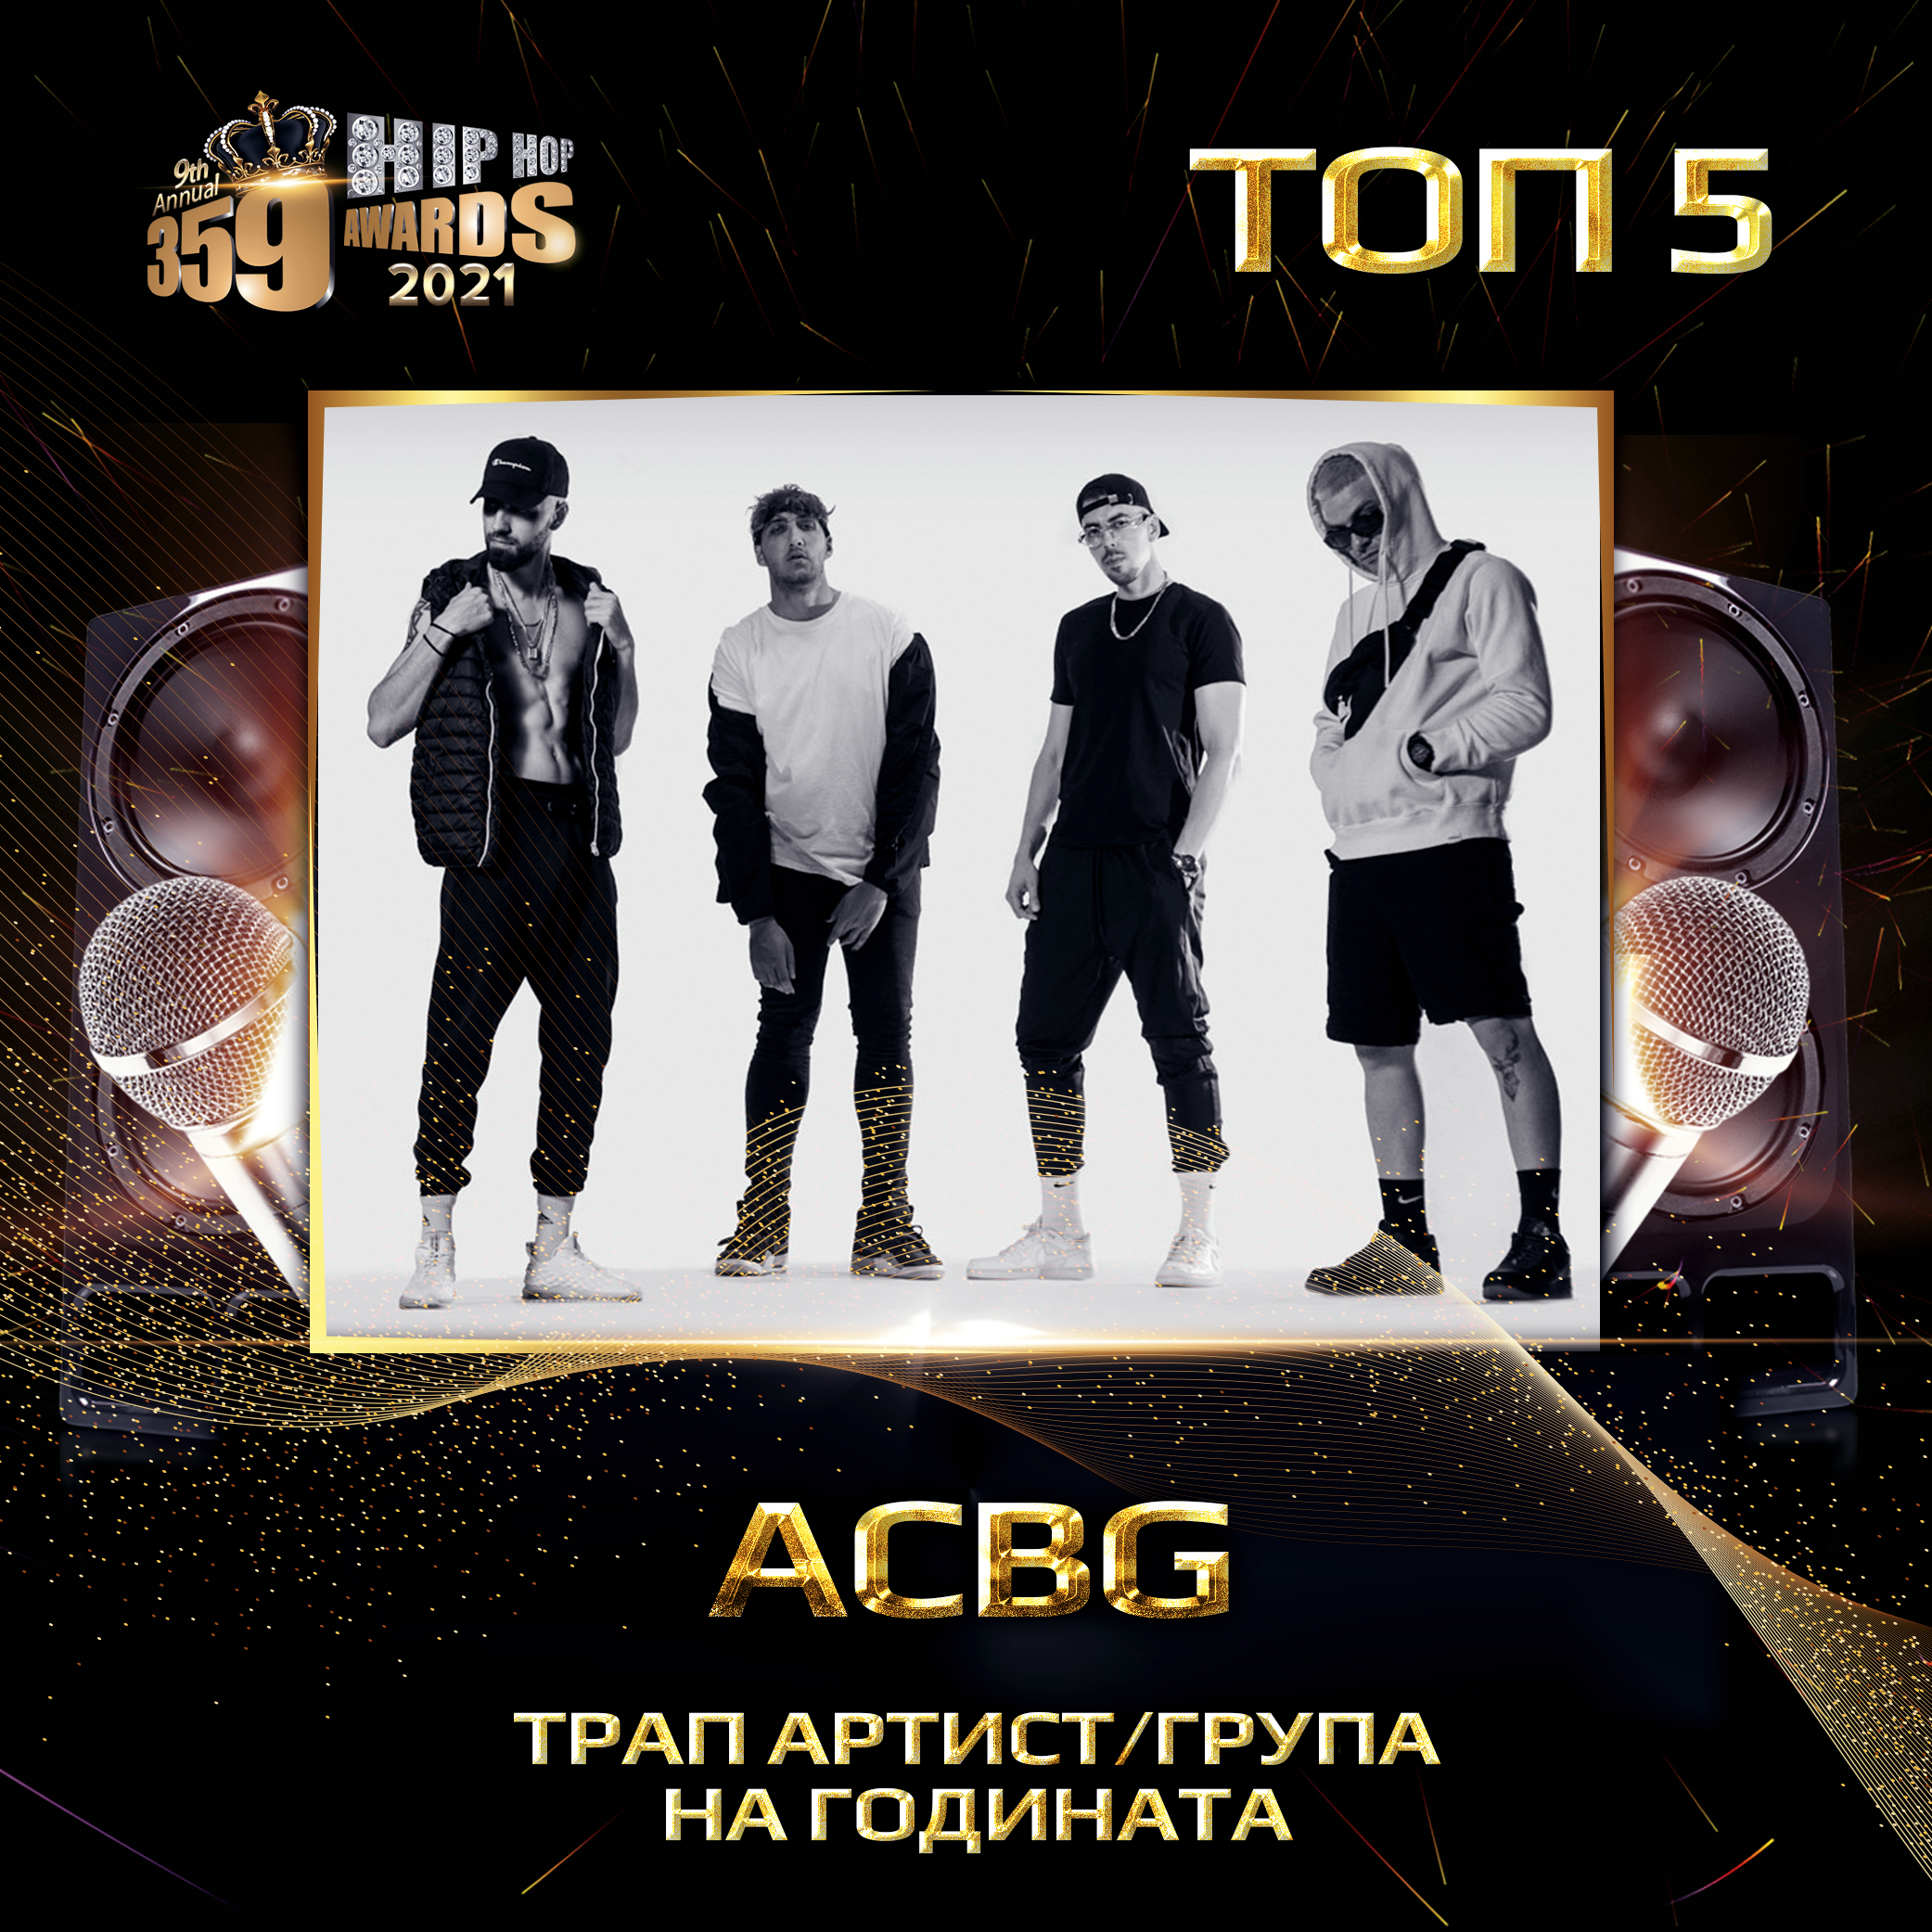 top 5  359 awards 2021 trap artist grupa acbg - Най-добър трап артист/група 2020